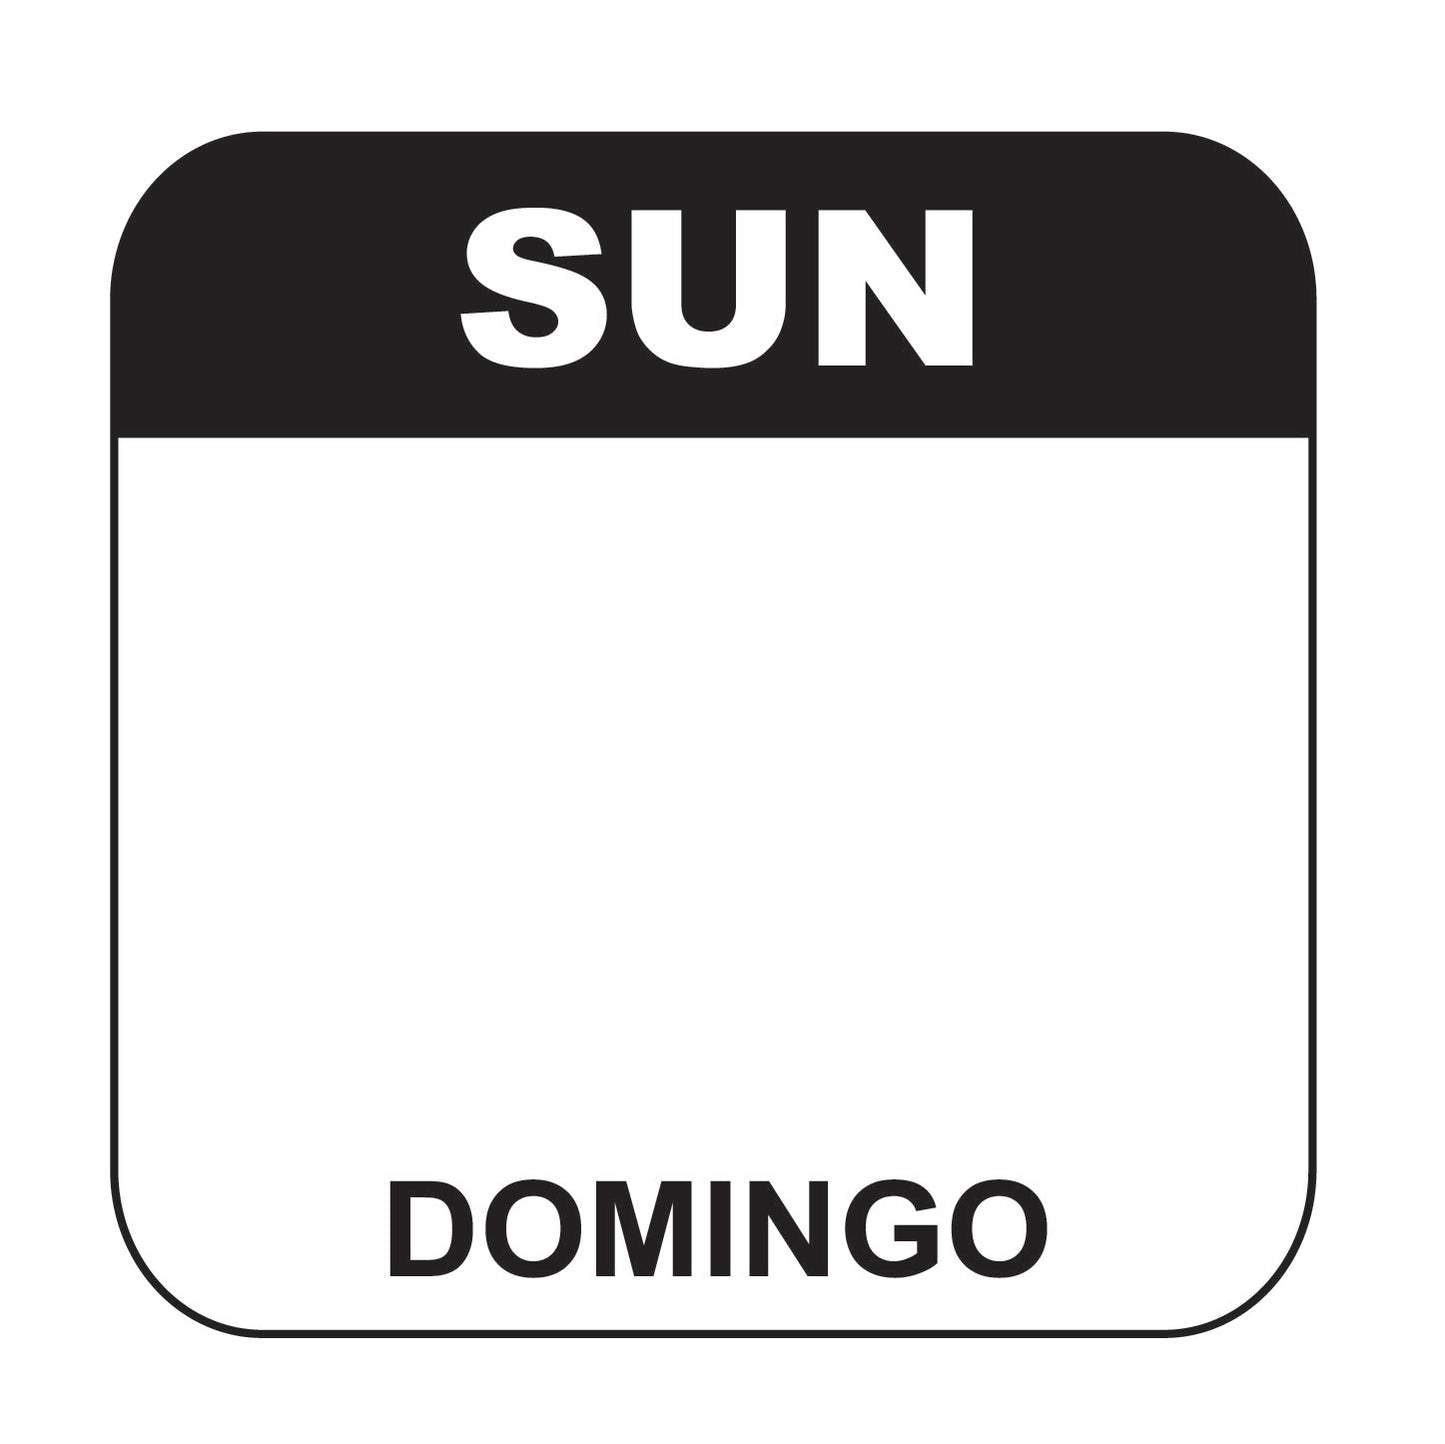 Sunday - Domingo 1" x 1" Dissolvable Date Label